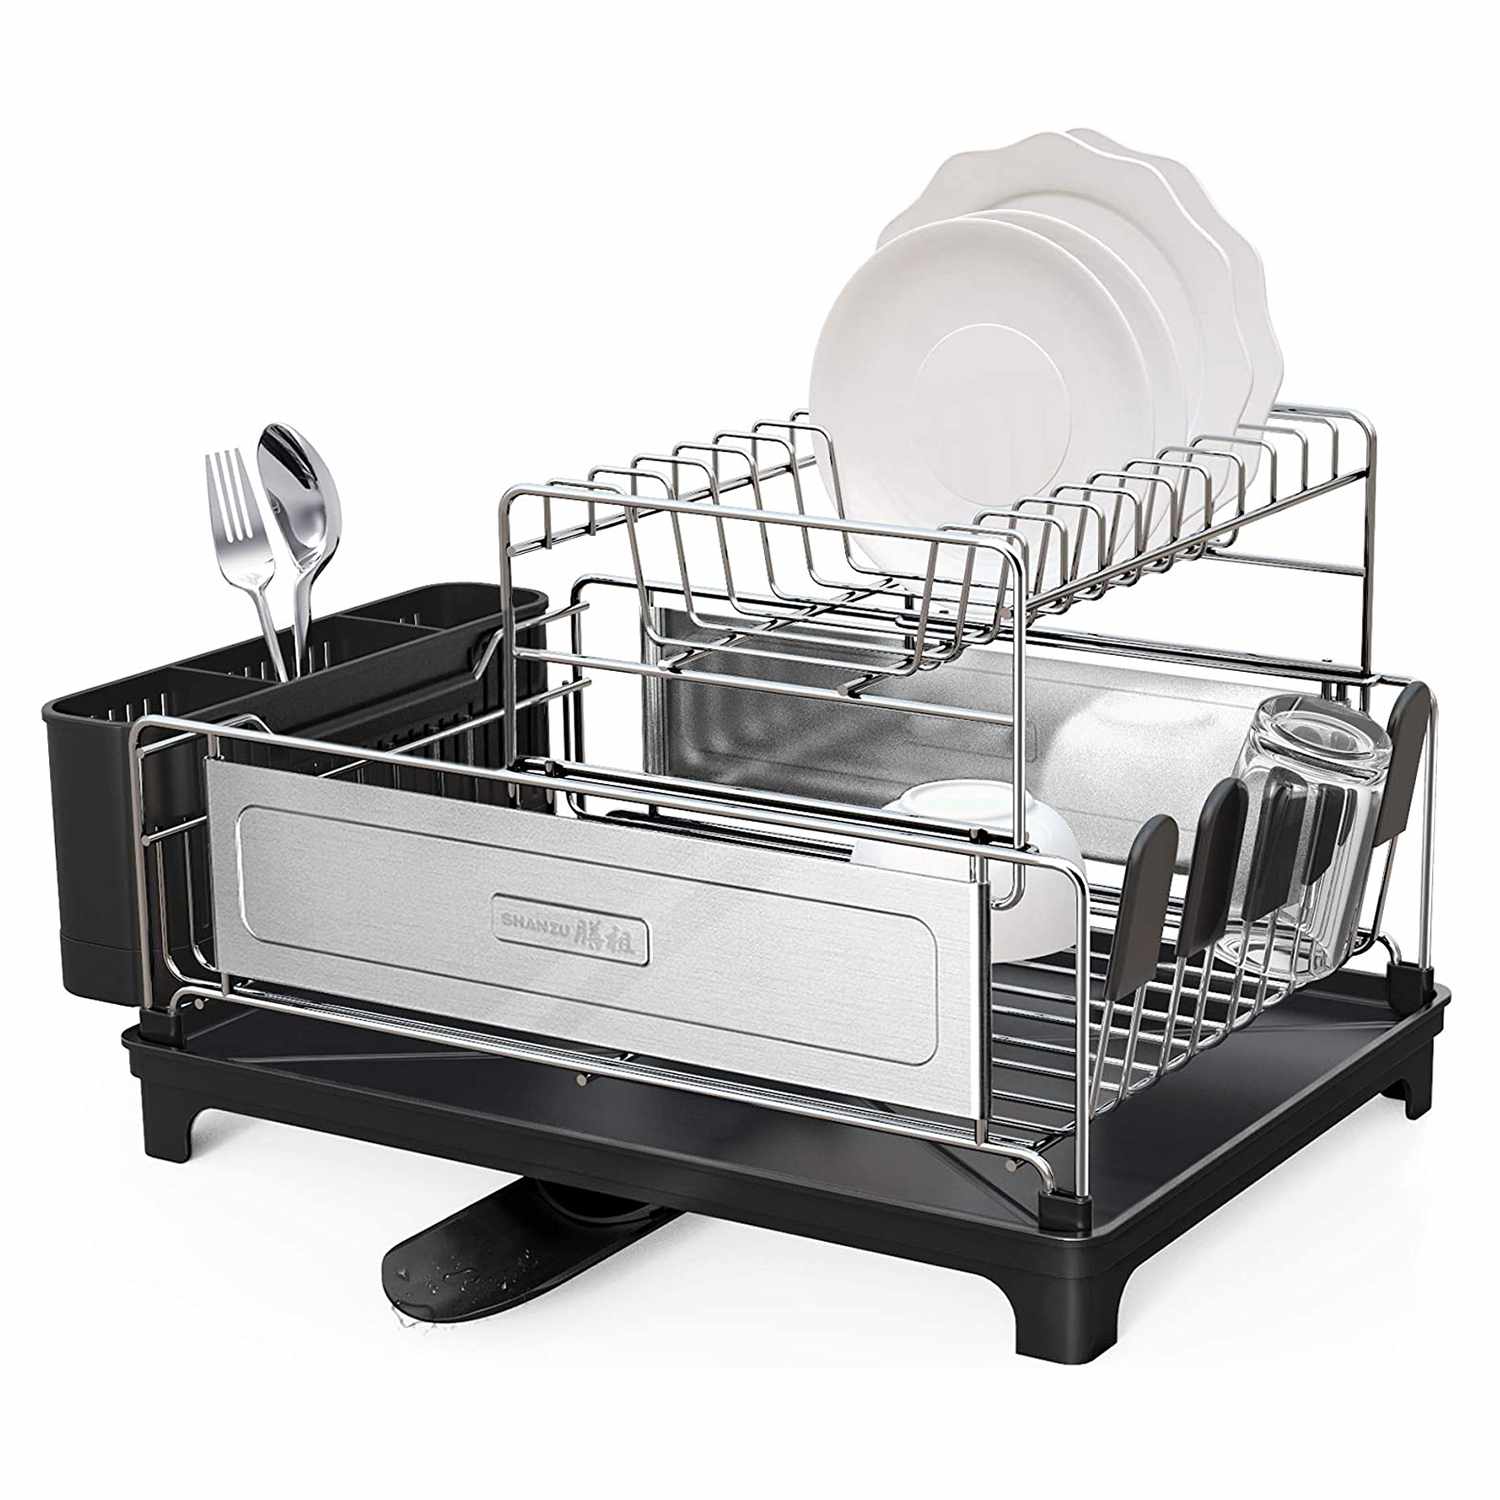 Dish Drying Rack, SHAN ZU 2-Tier Compact Kitchen